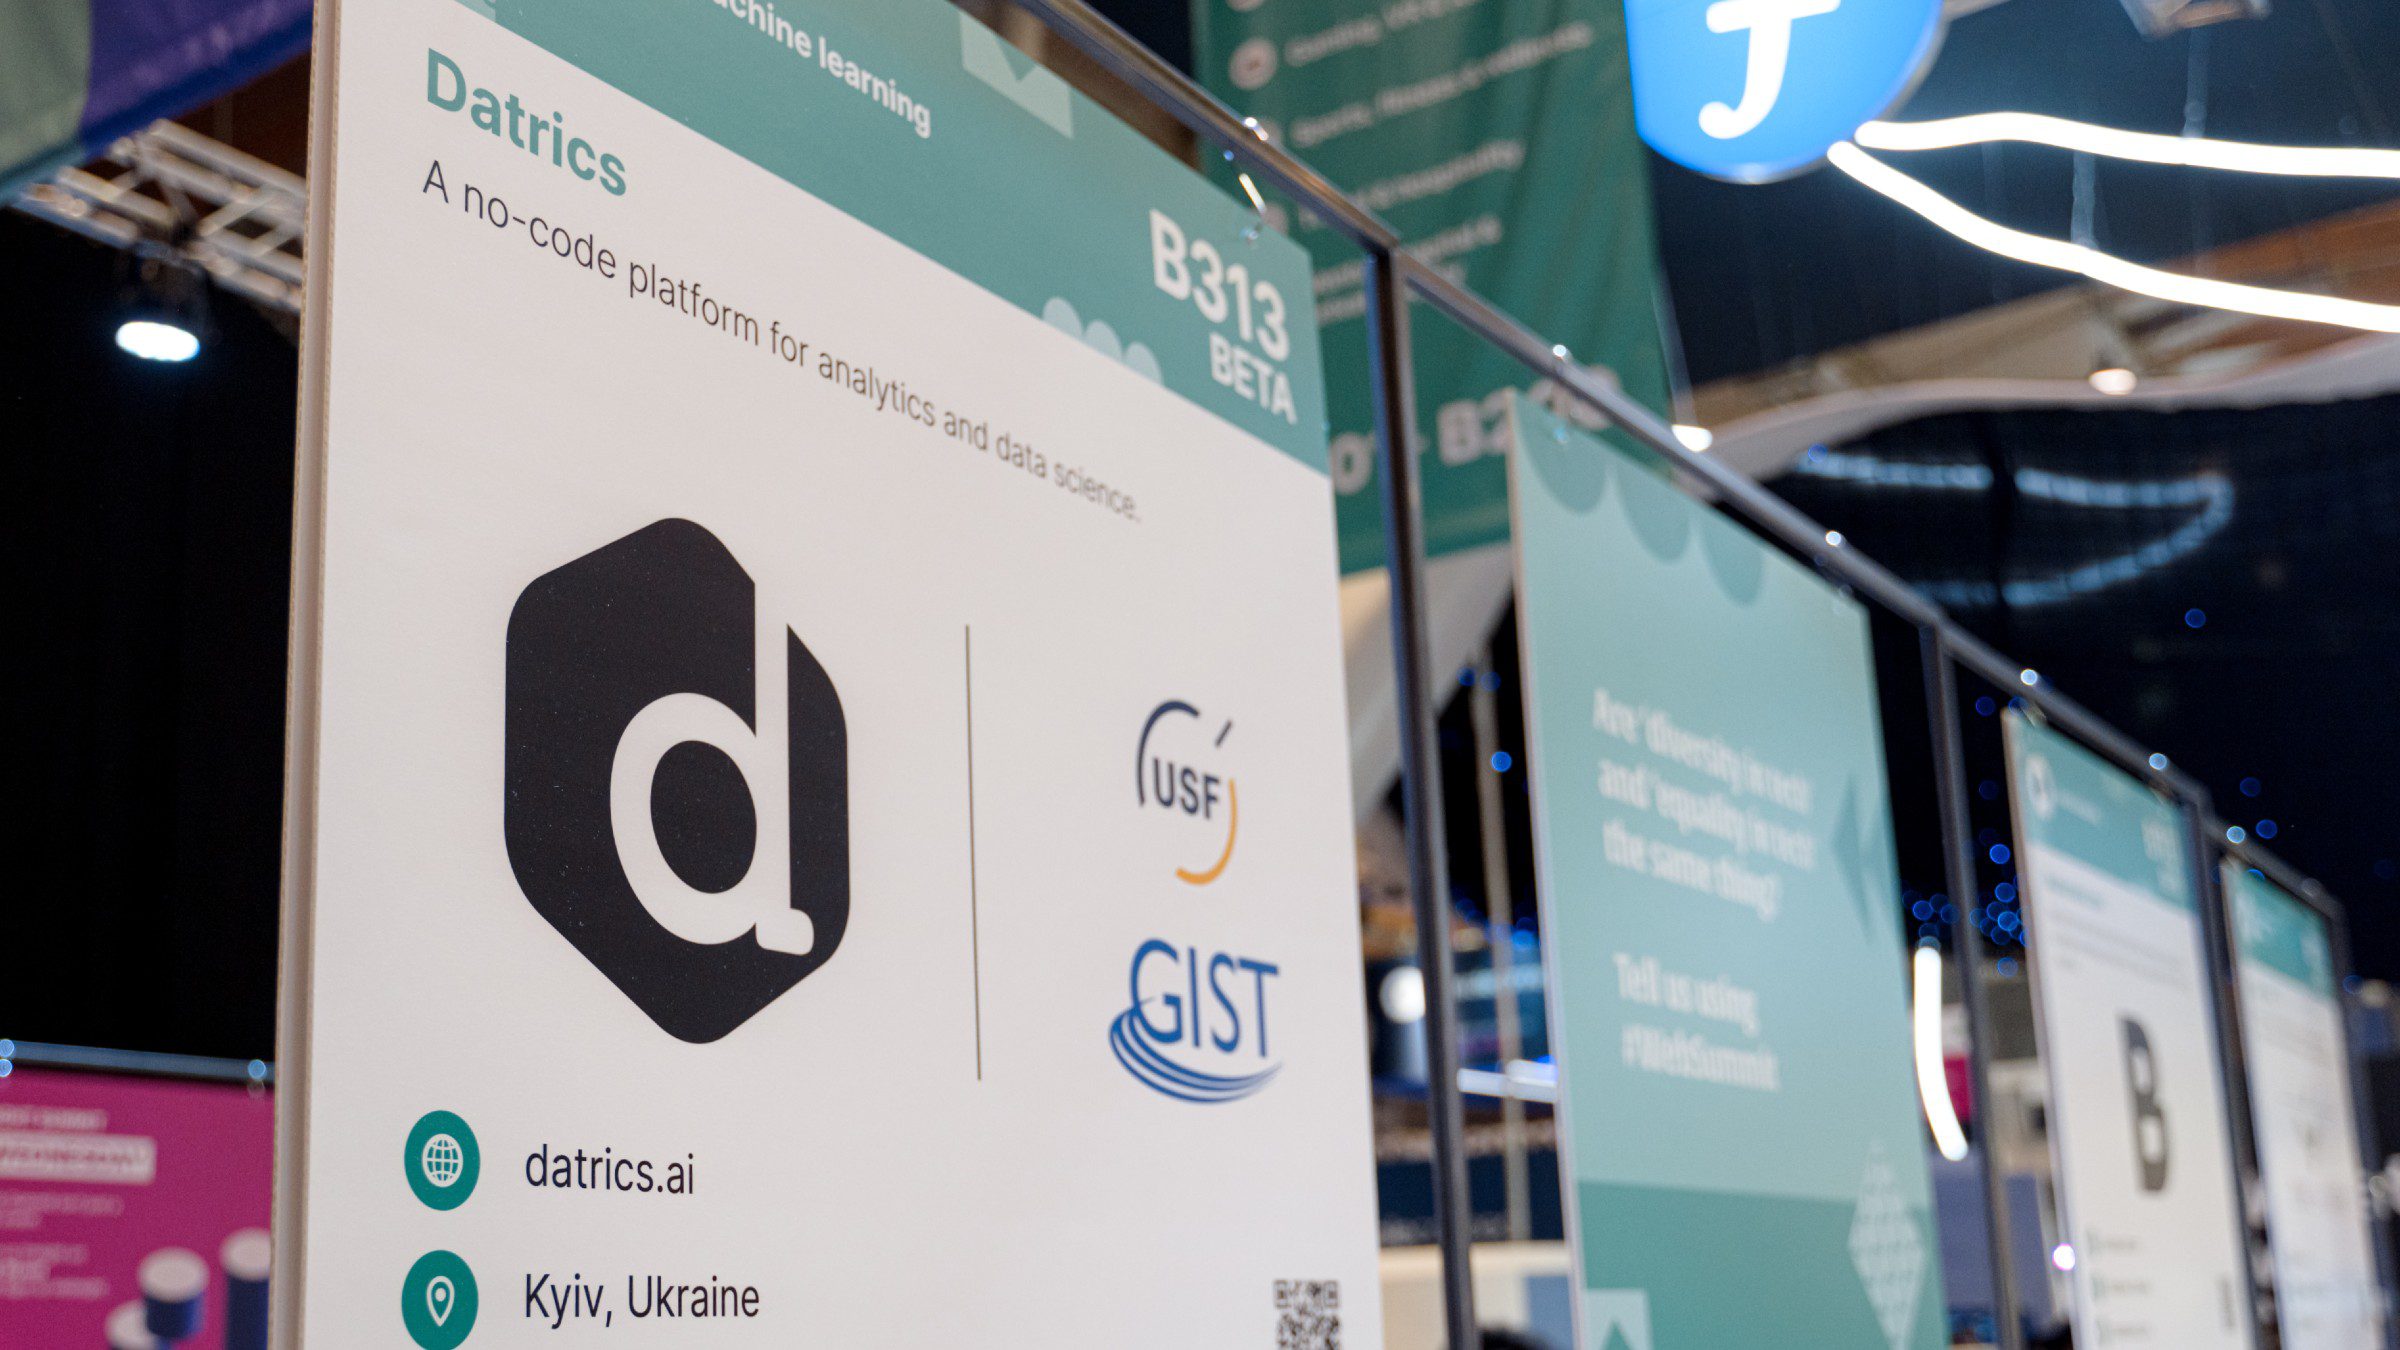 Datrics, Ukrainian Startup Alley at Web Summit 2022